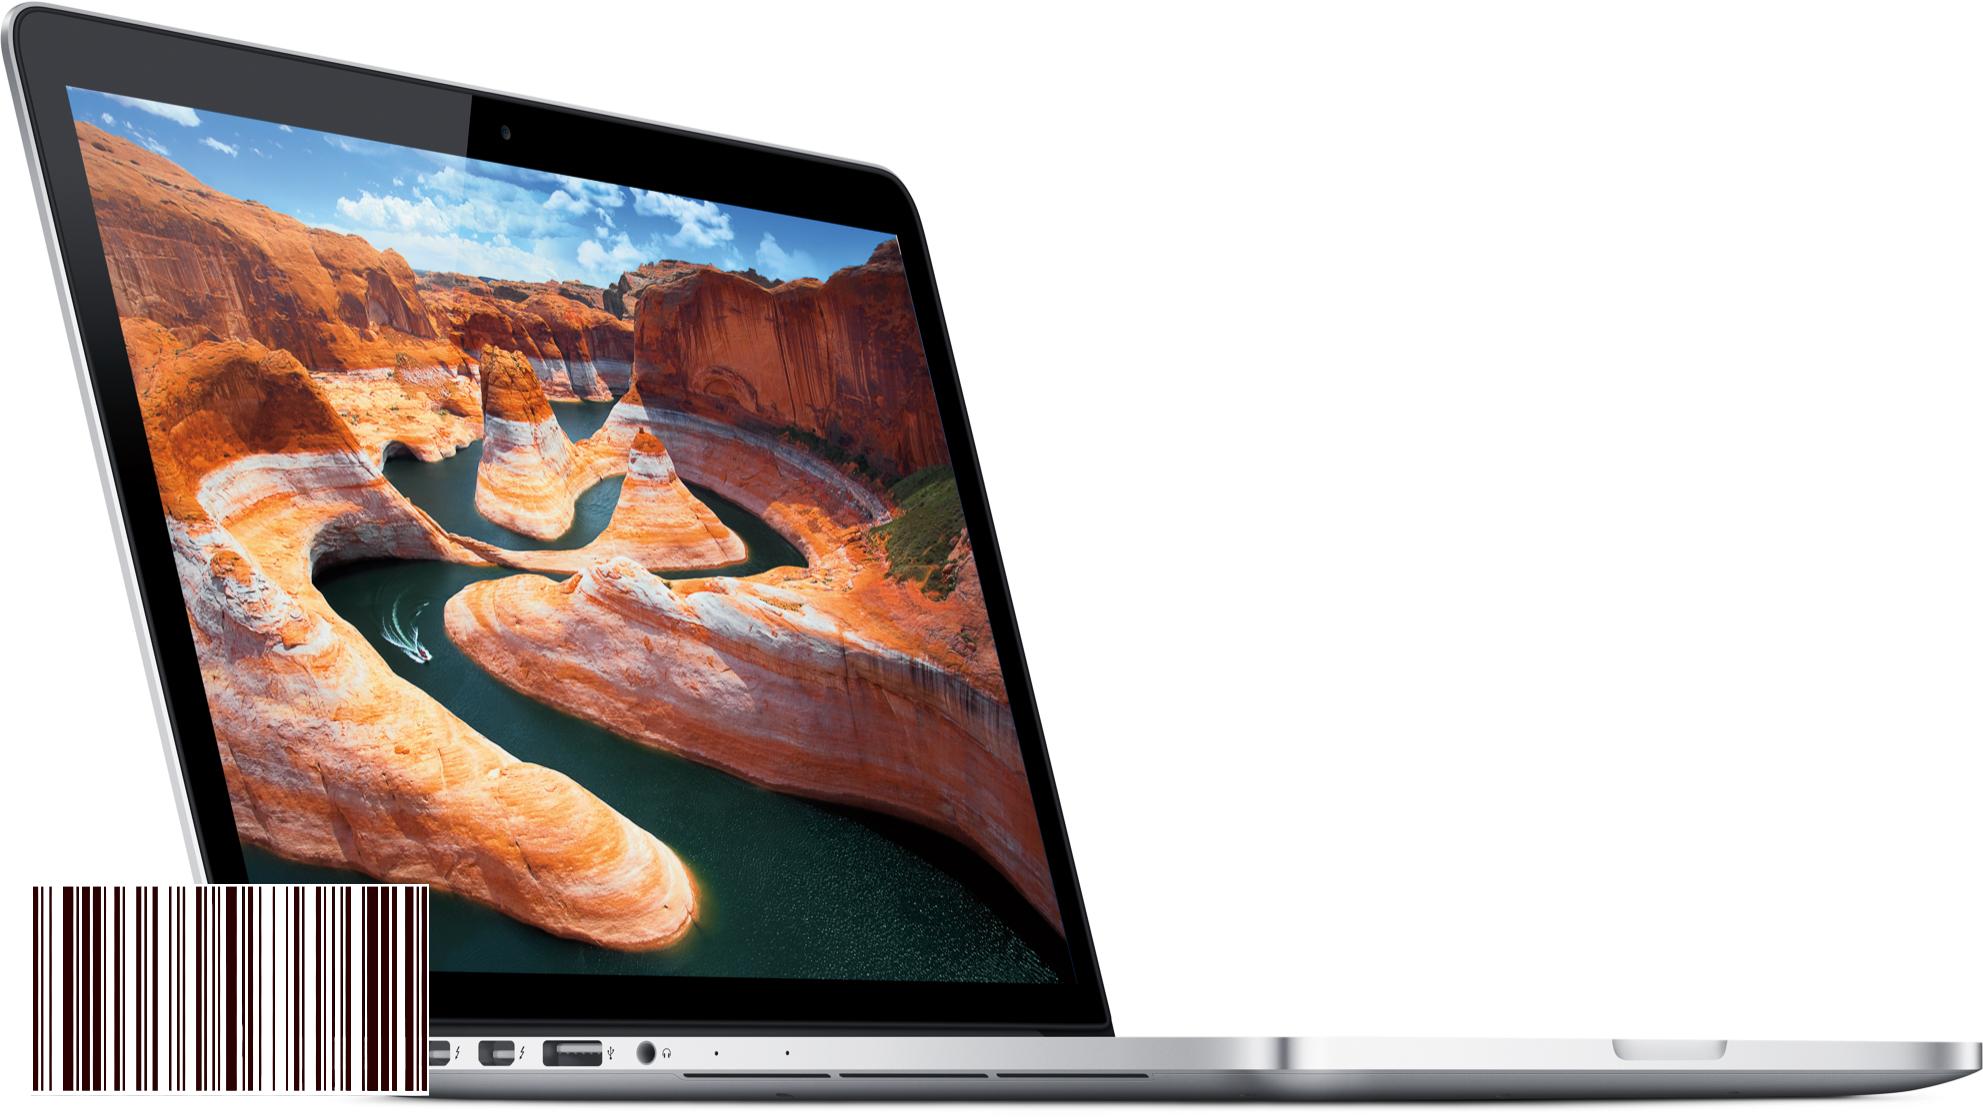 ↪ MacBook Pro مع شاشة Retina مقاس 13 بوصة هو الخيار الجديد لمحرري PCMag.com